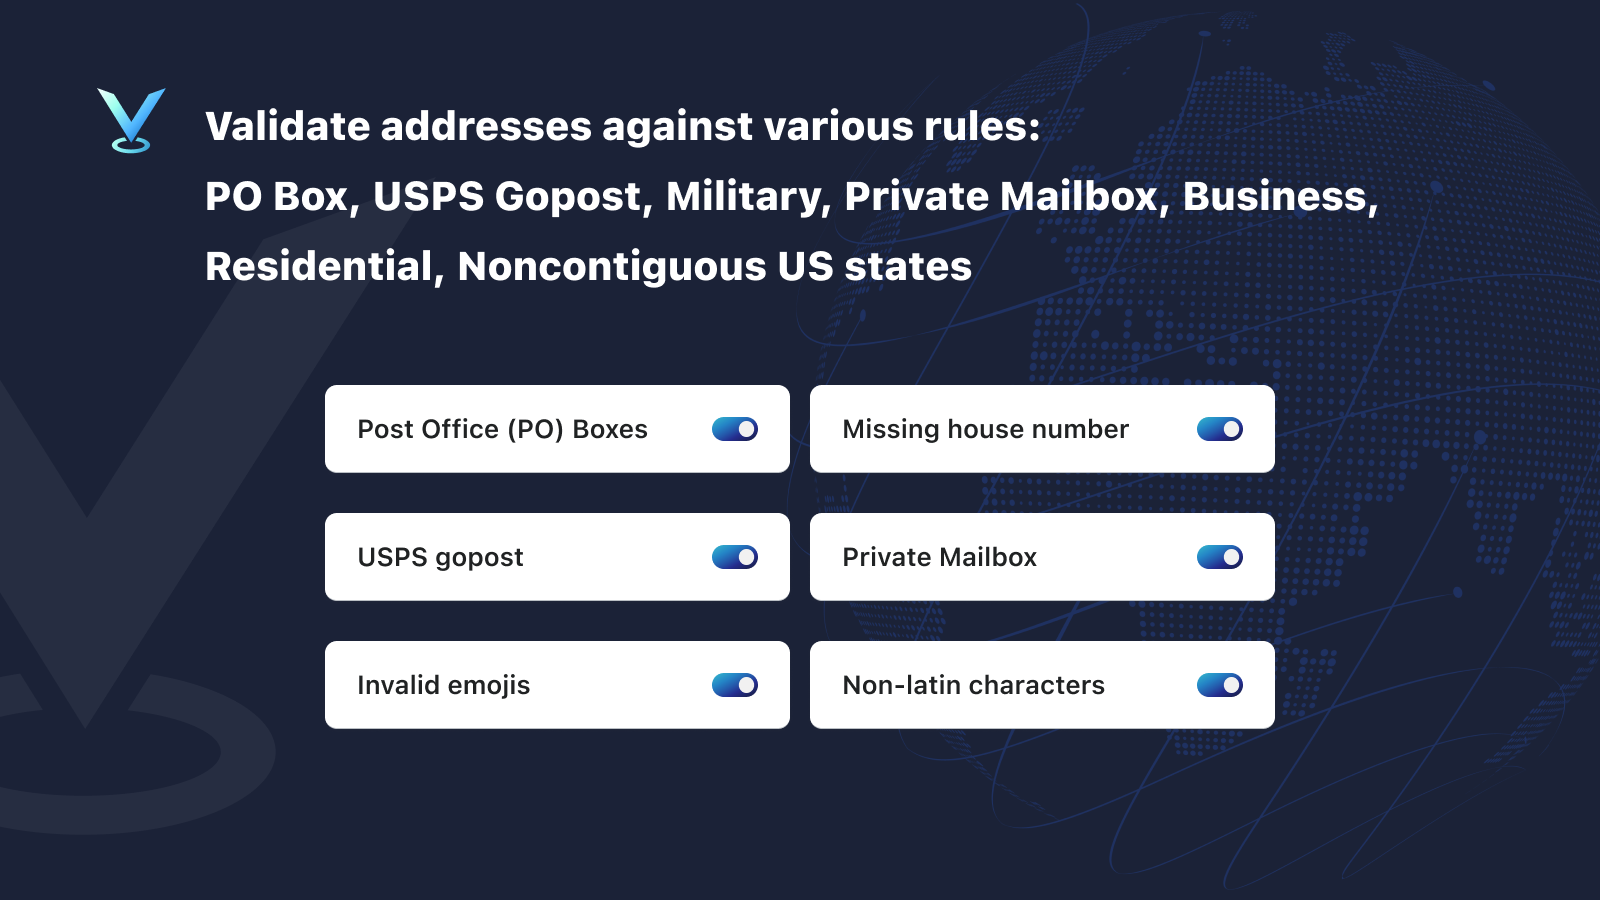 Validate addresses against various rules: PO Box, Zipcode, etc.